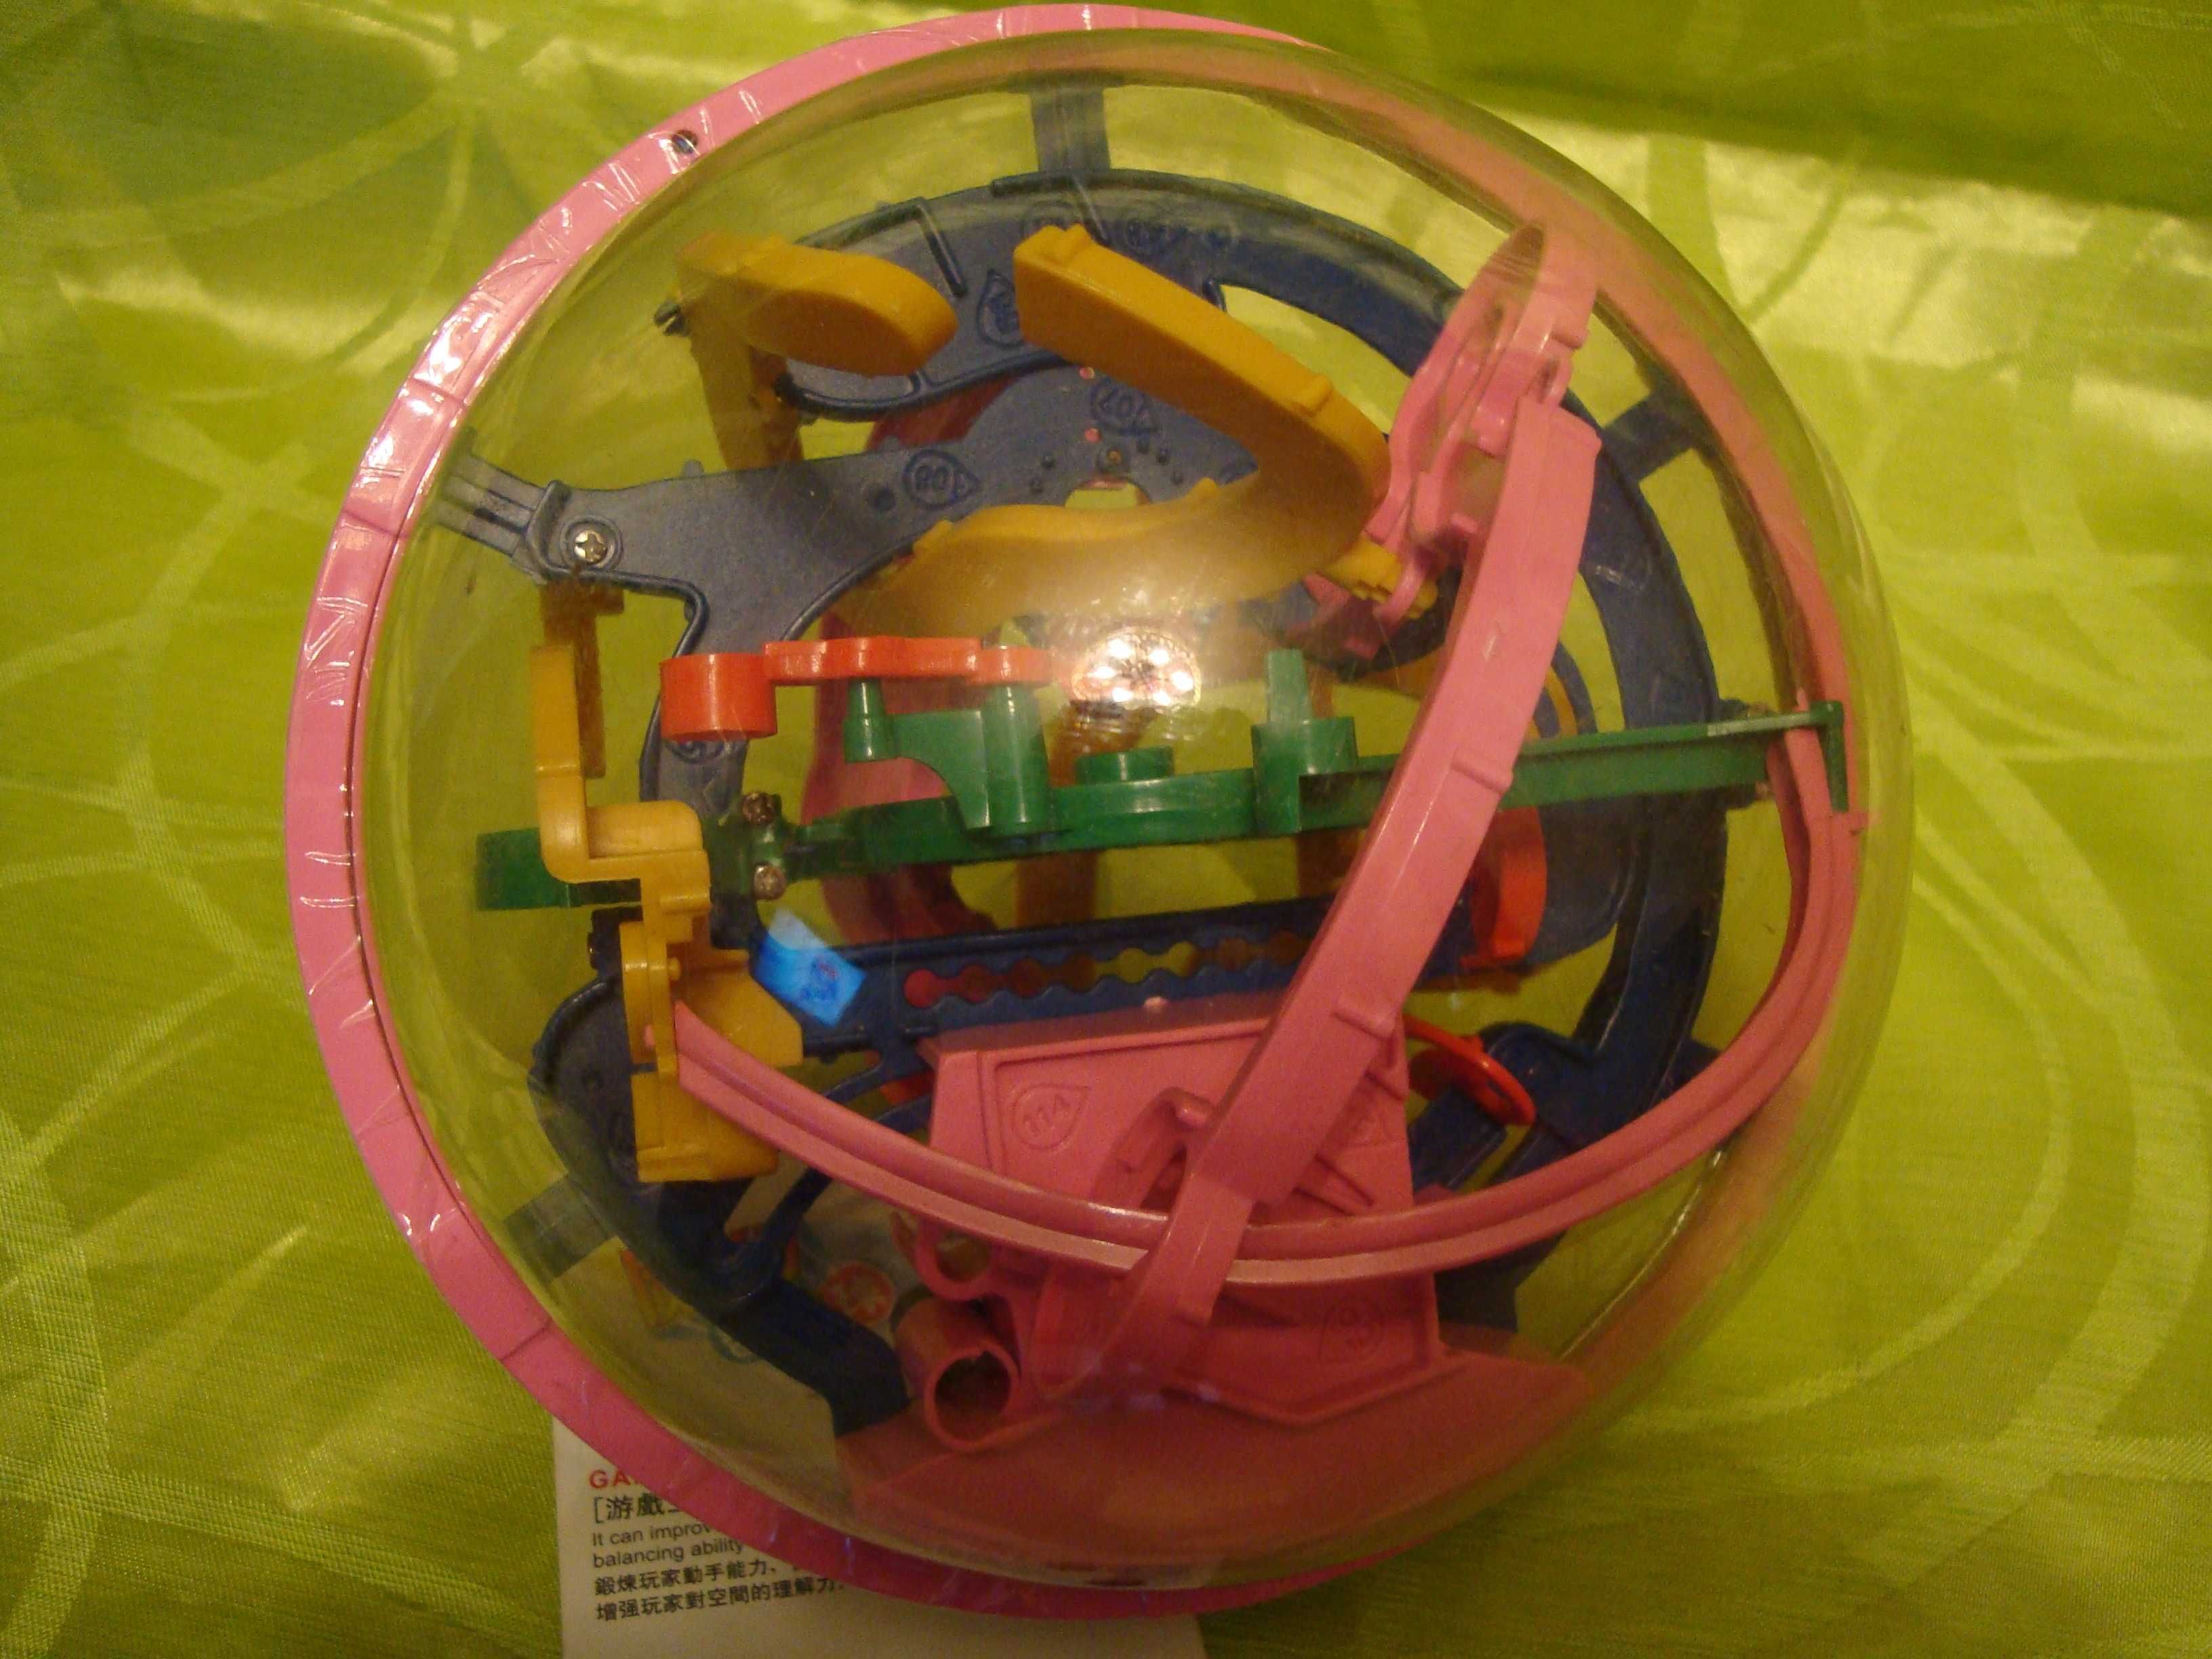 Увлекательная игрушка "Magical Intellekt Ball" - шар-лабиринт